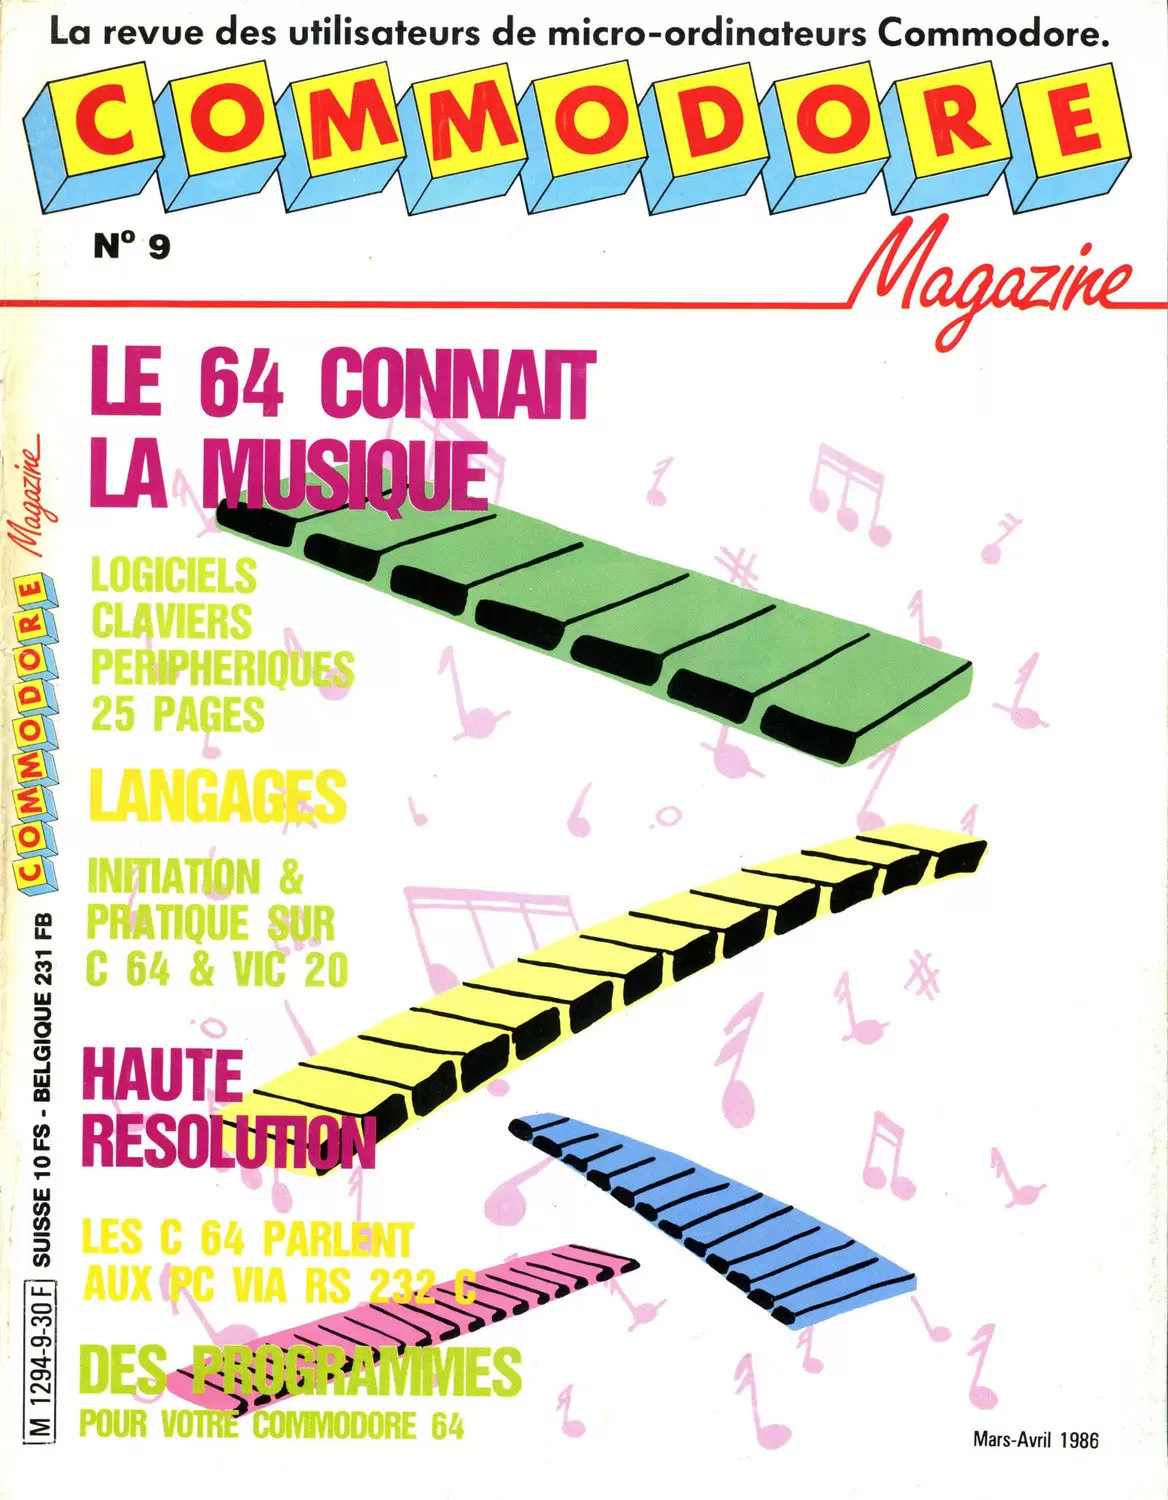 Commodore Magazine - Commodore Magazine n°9